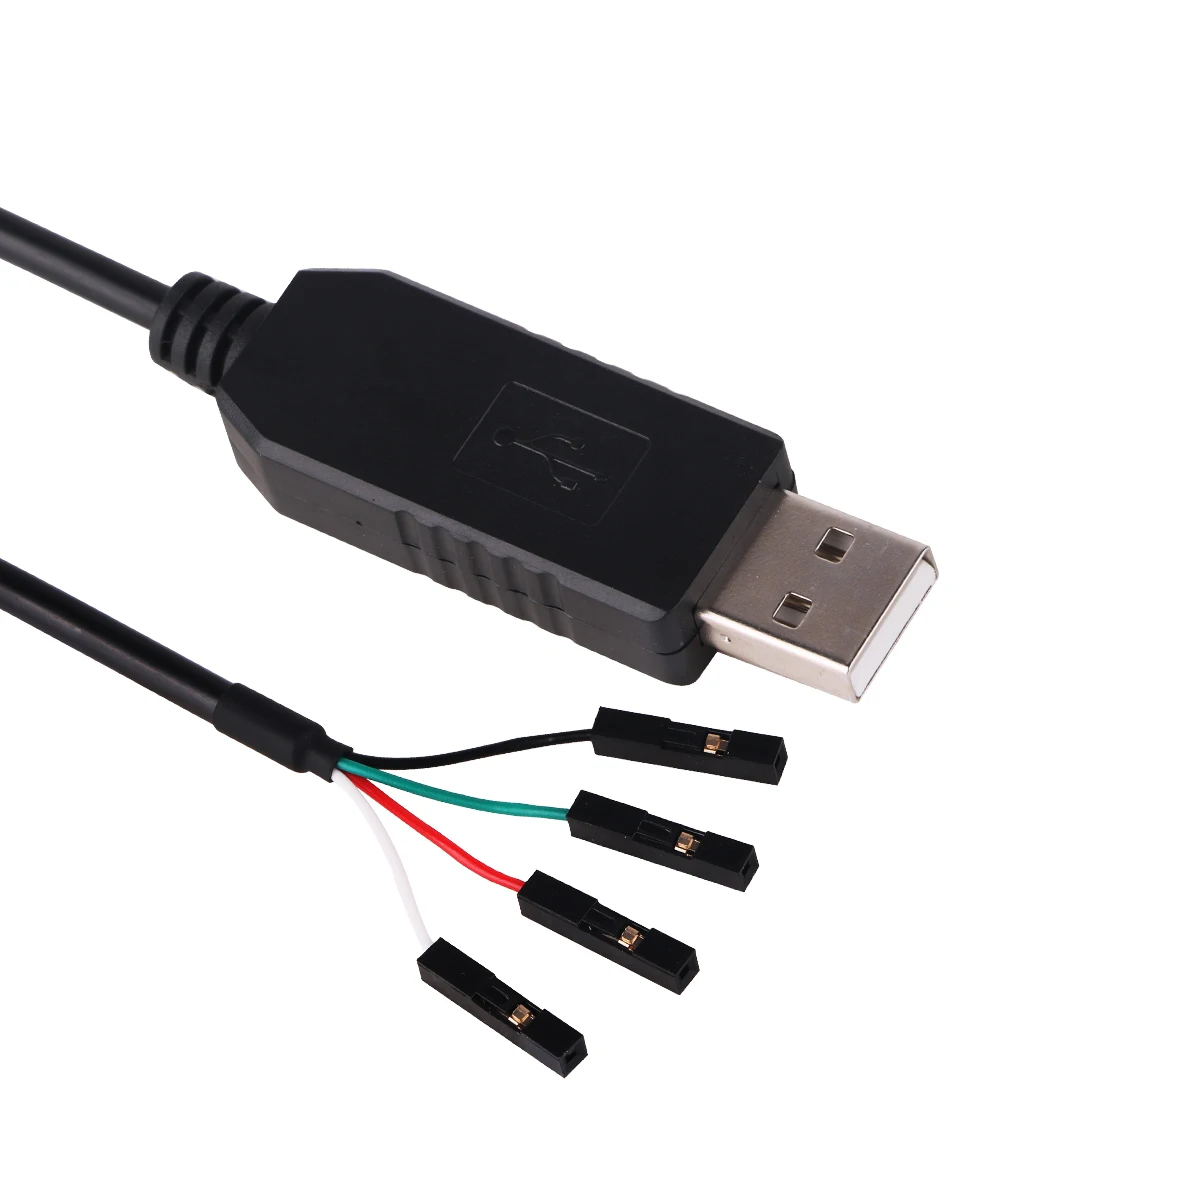 FTDI TTL-232R TTL TO USB 4-Way SIL,0.1” 2.54mm Pitch 4 Pin Terminal Block Adapter Connector Serial Converter Cable ftdi usb to 3 5mm audio jack ttl uart level 3 3v 5v serial adapter converter cable